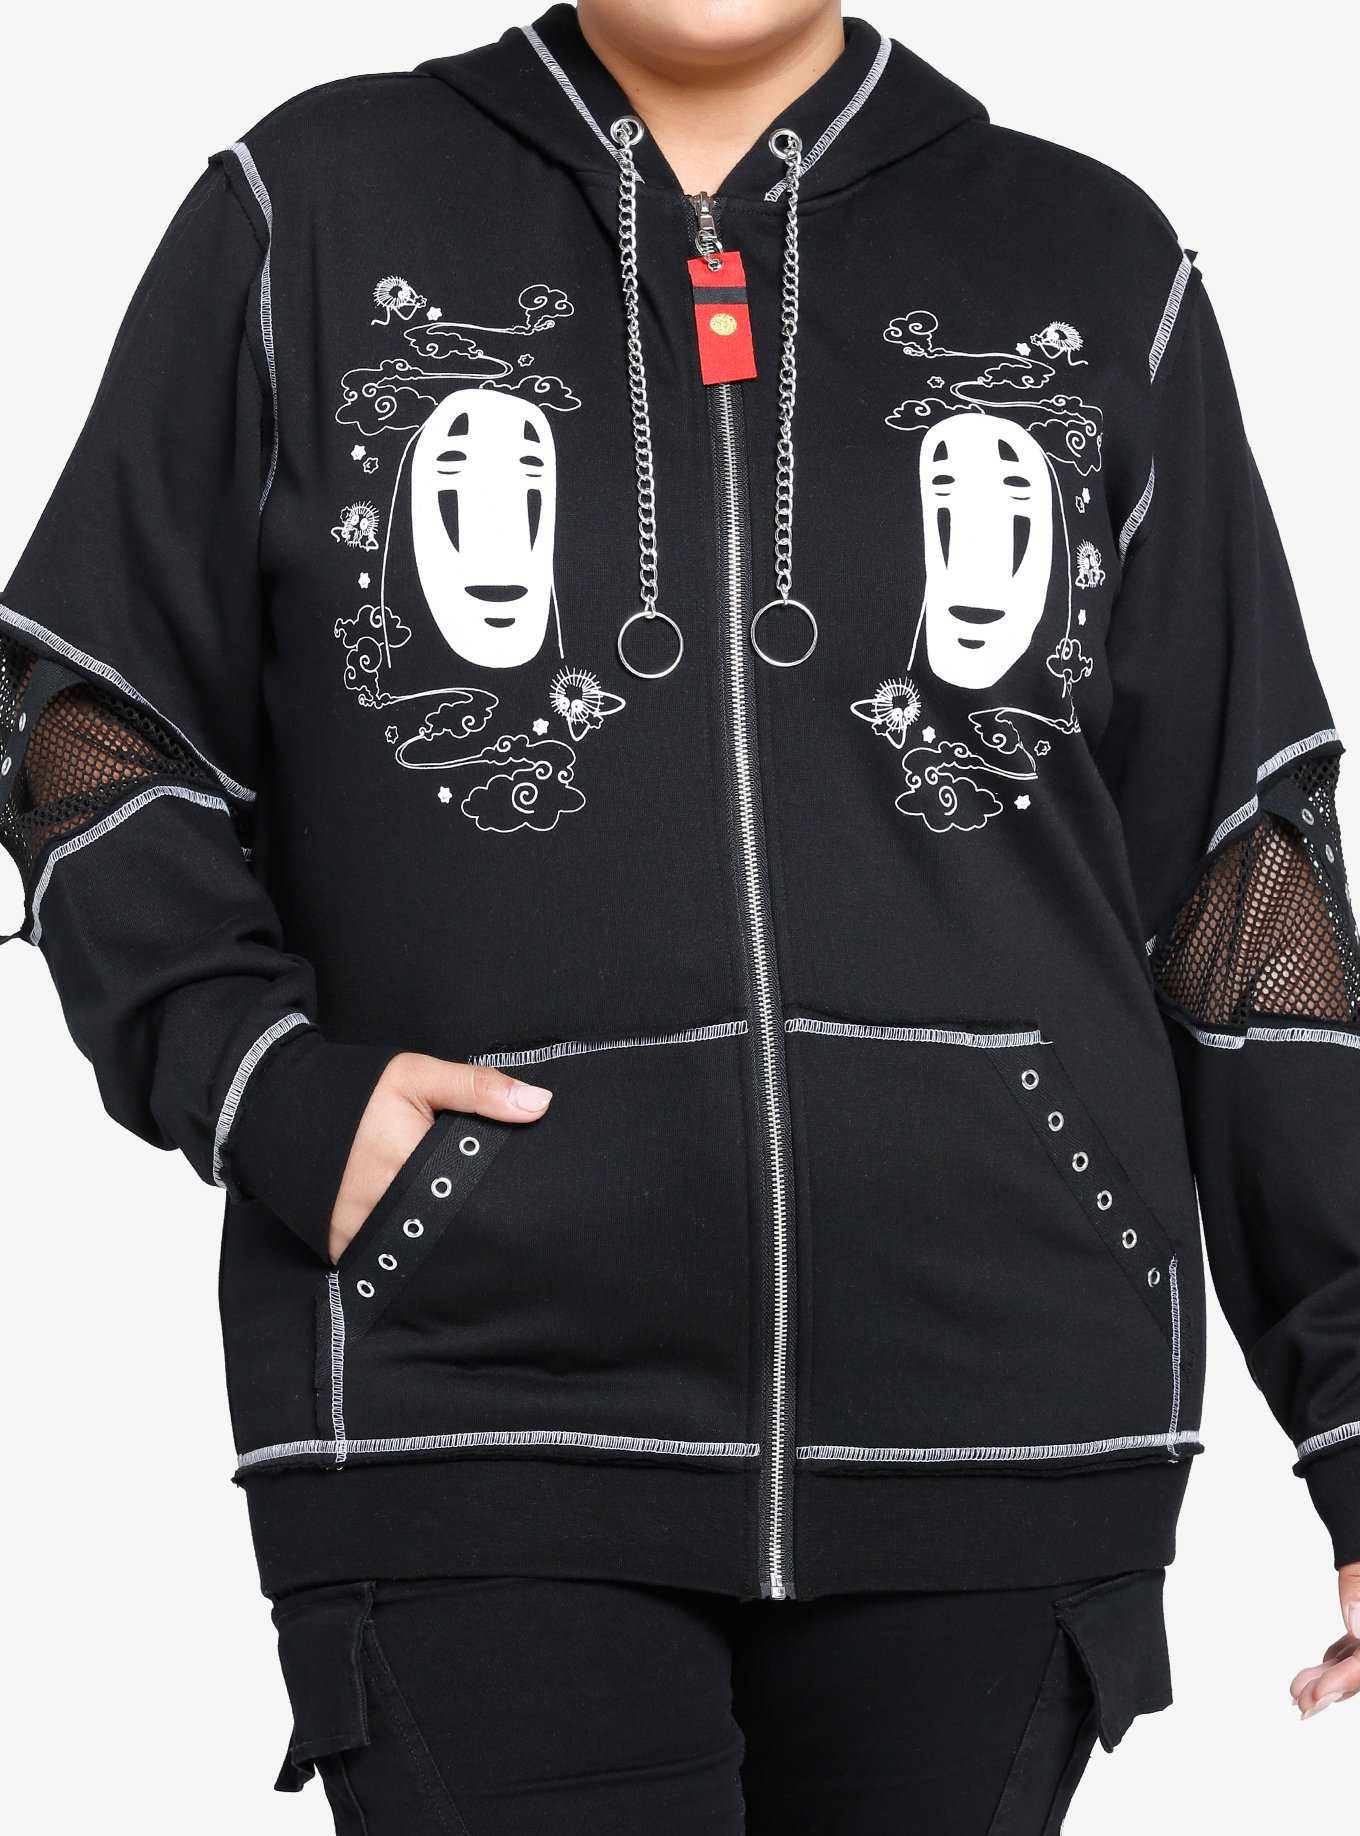 Creepypasta 3D Printed Hoodies Men Women Harajuku Streetwear Hooded  Sweatshirts Boys Girls Autumn Winter Anime Pullovers